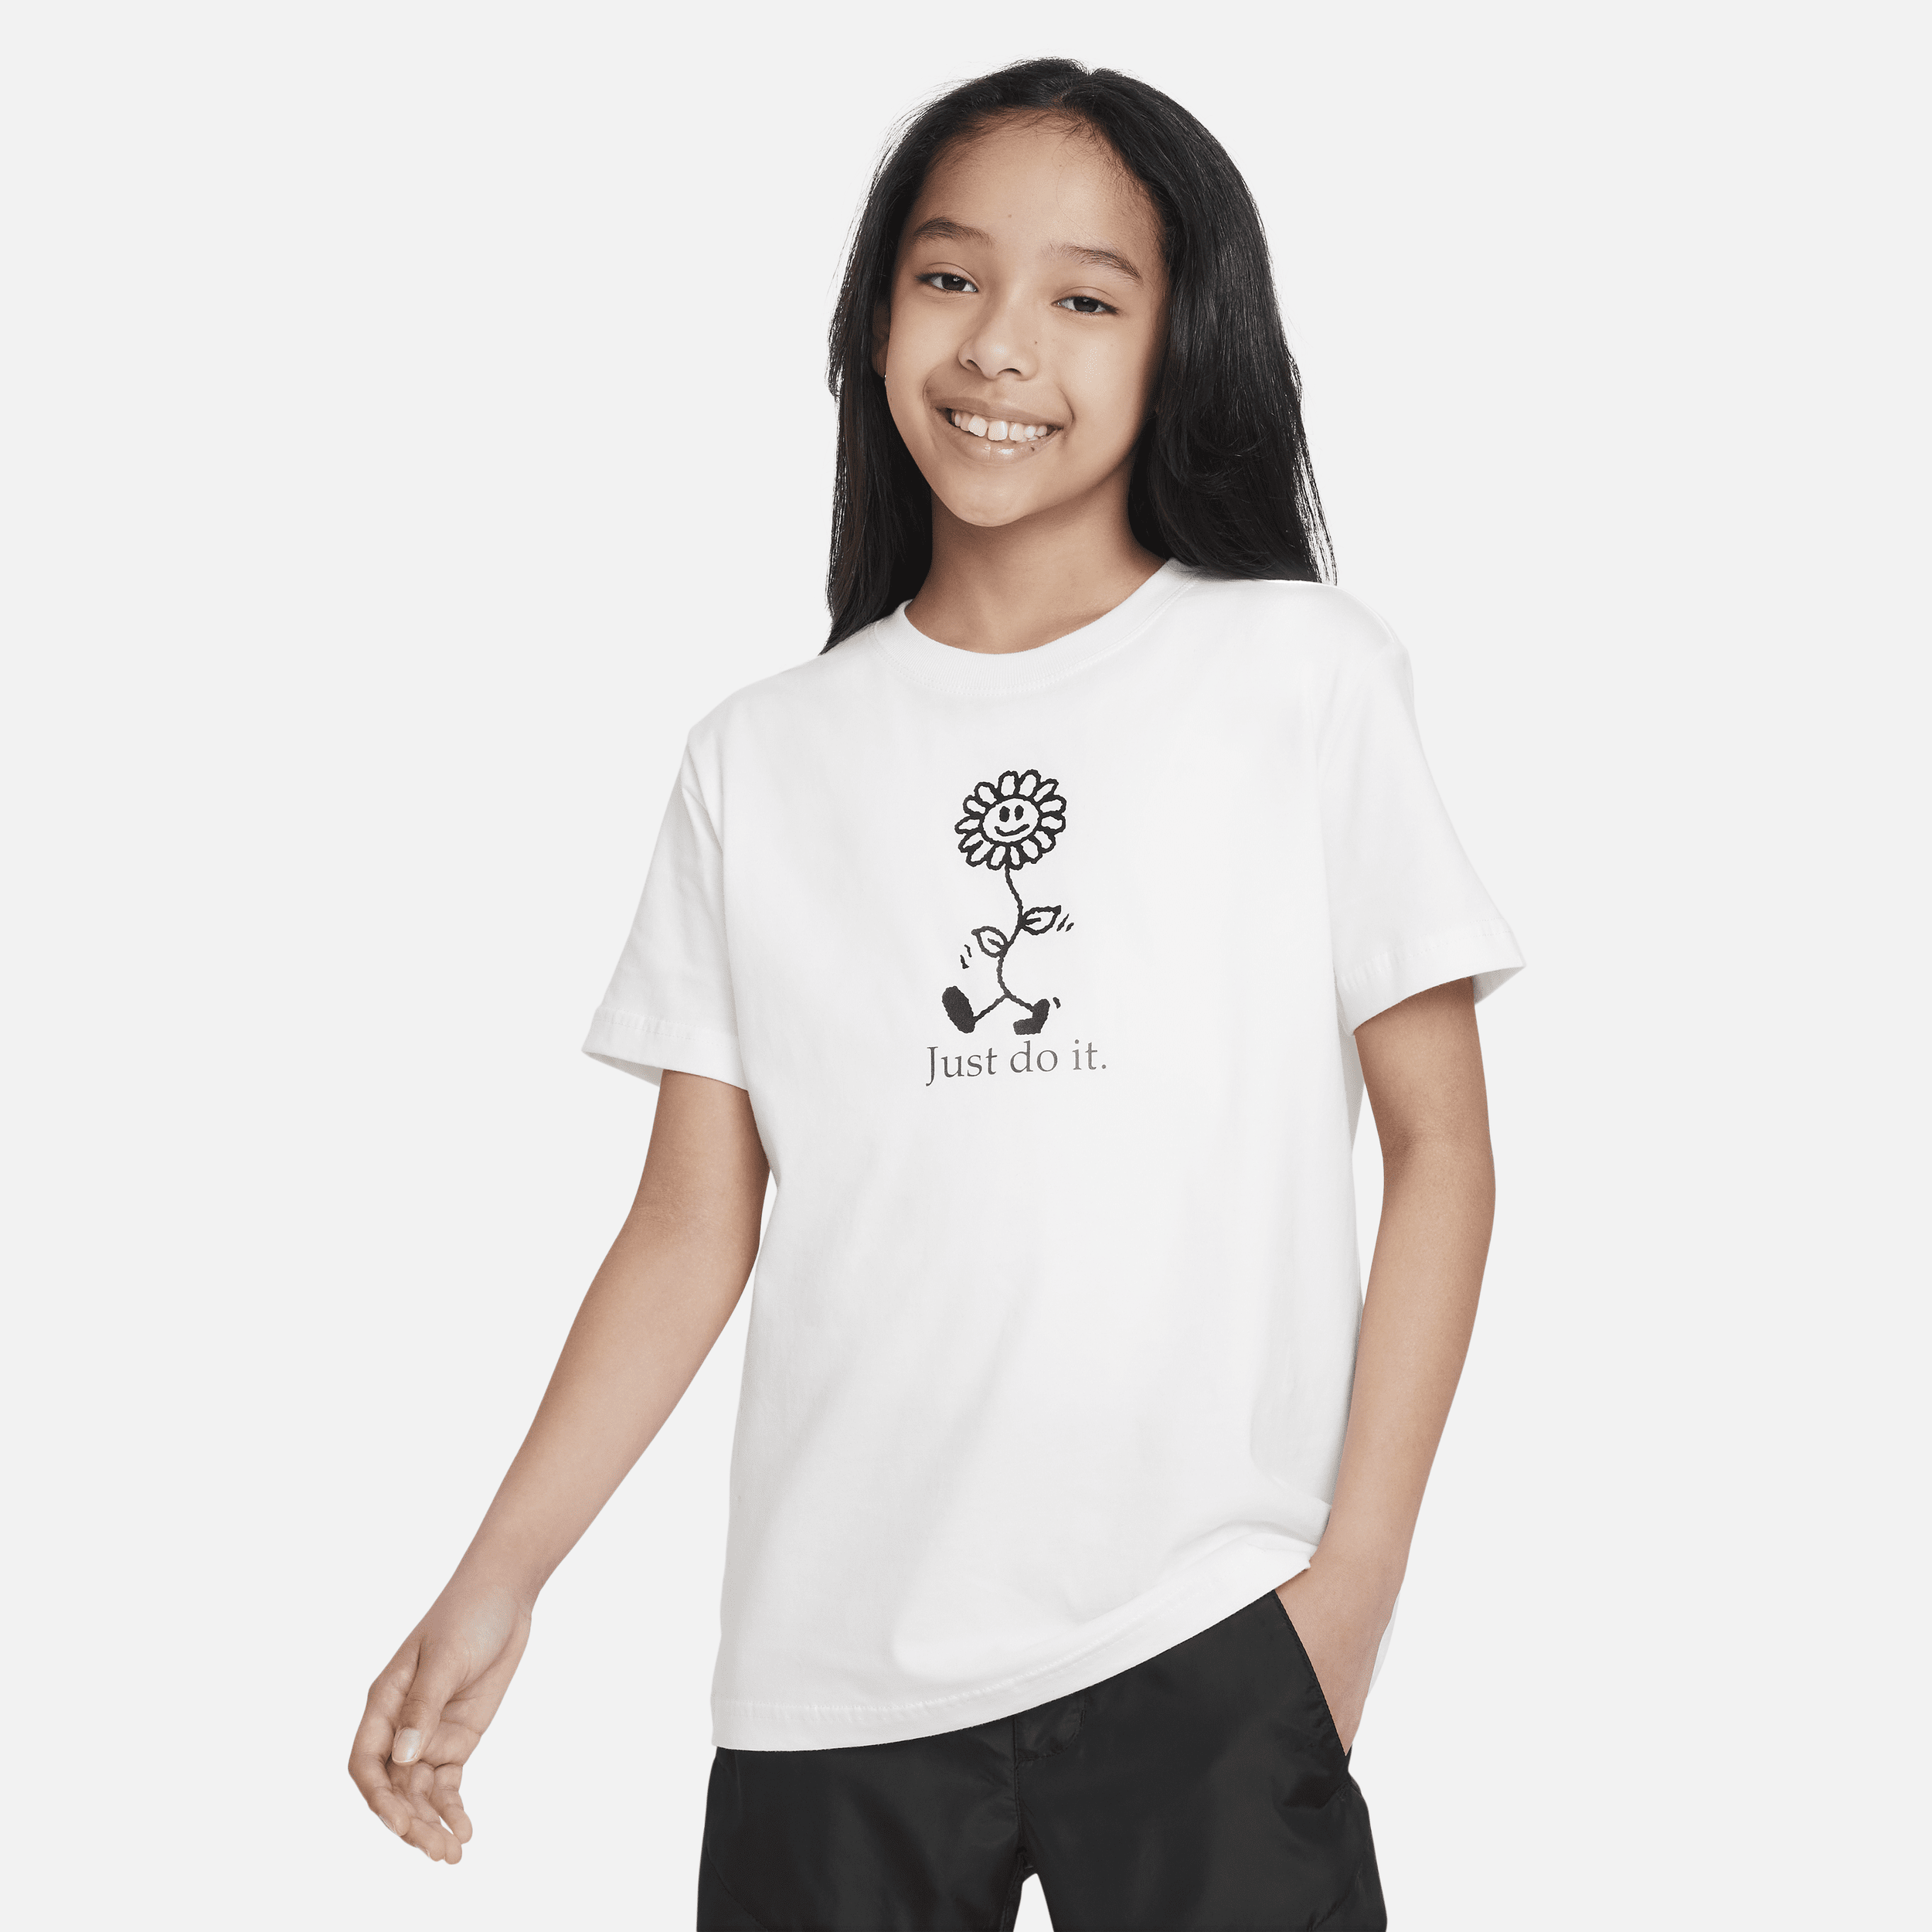 Nike Sportswear Big Kids' (girls') T-shirt In White